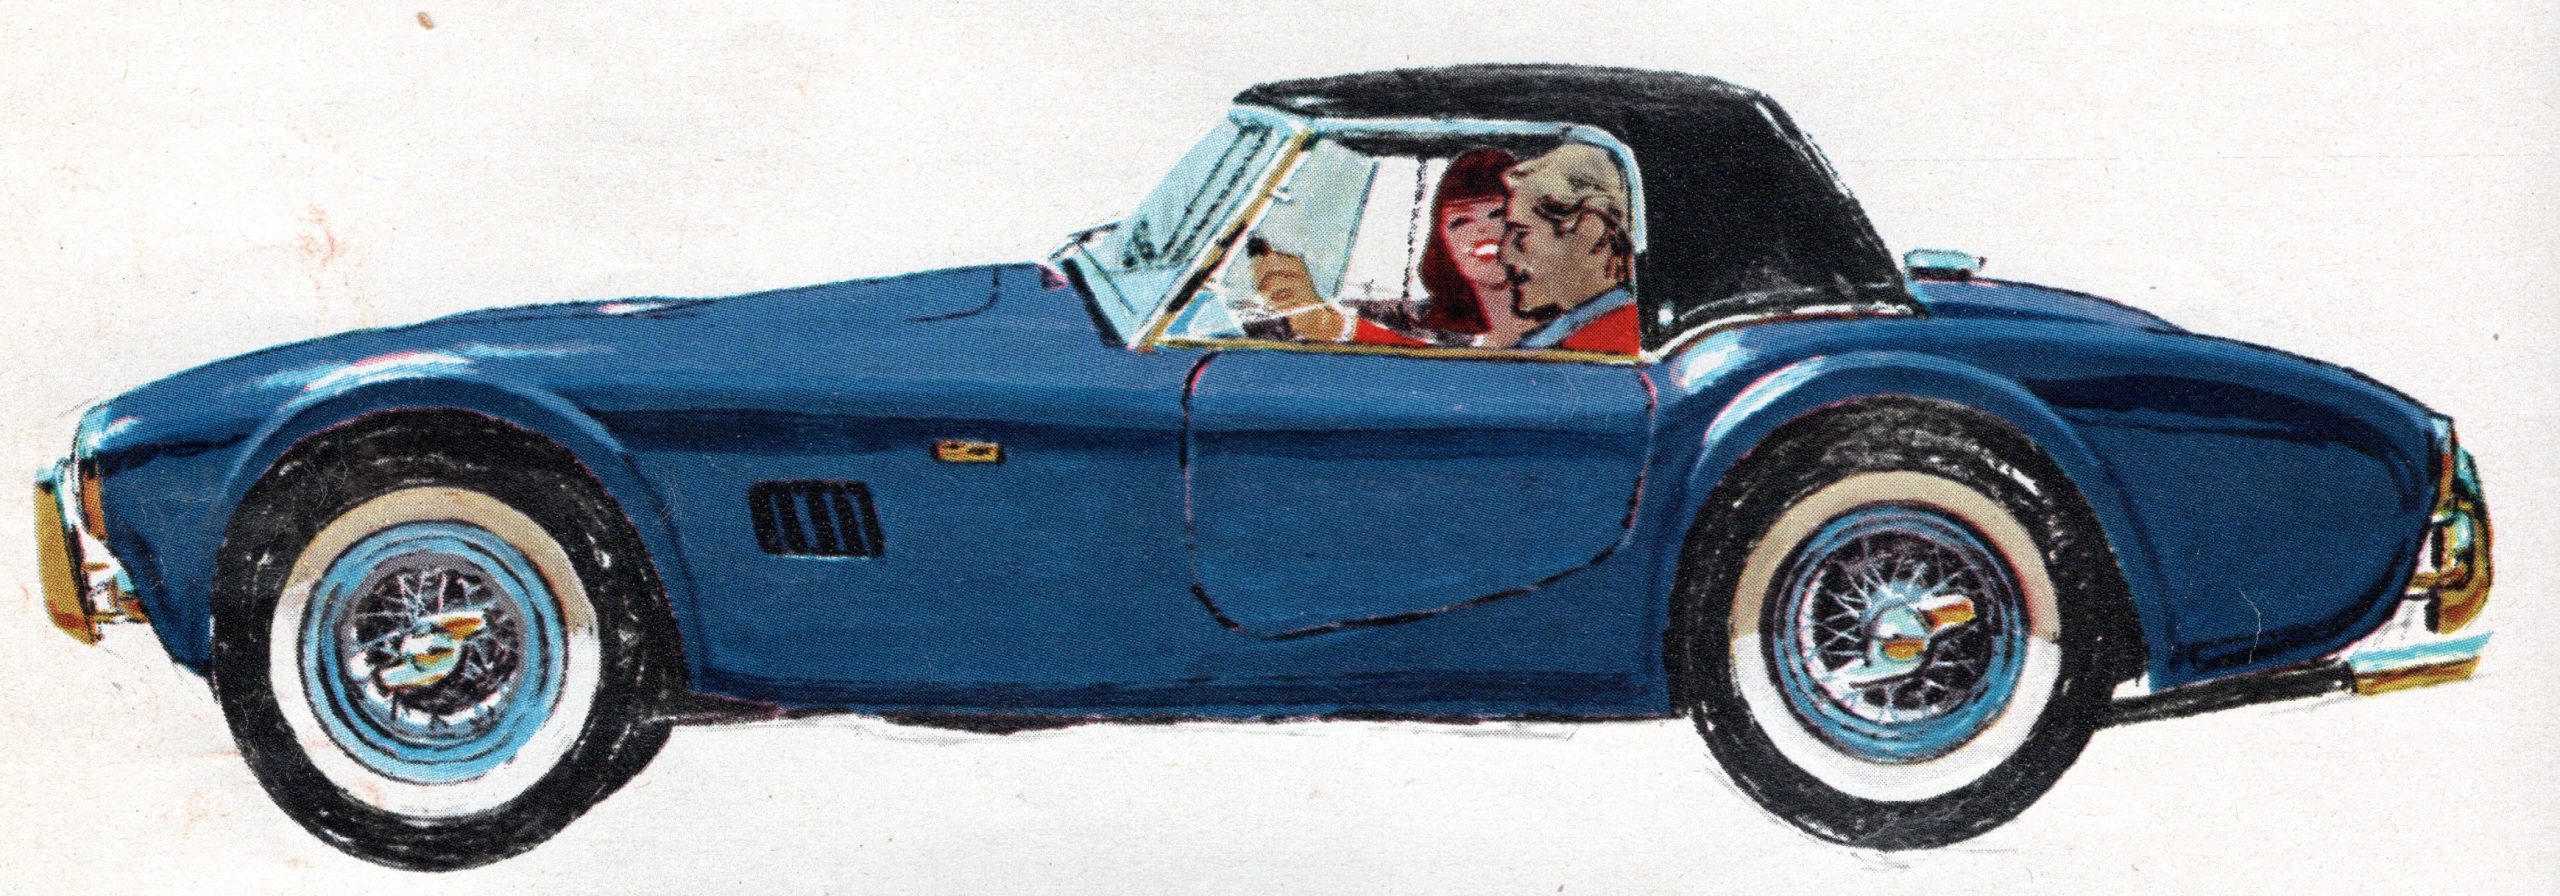 1965 Cobra Hardtop